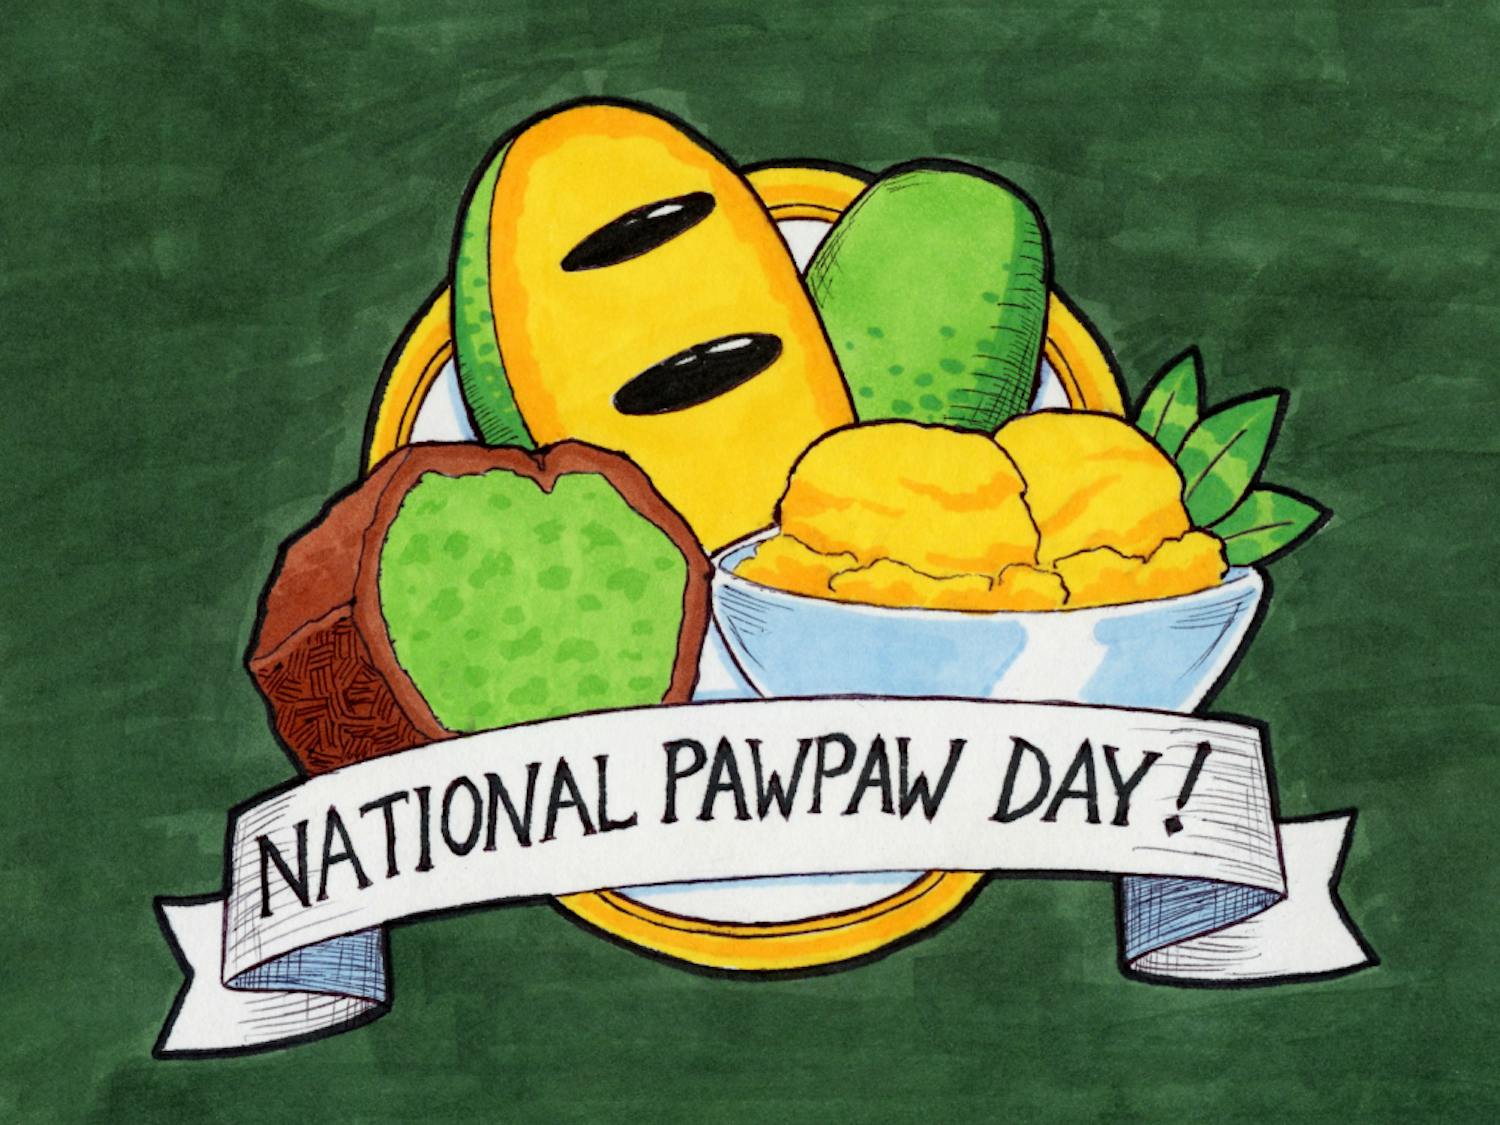 Pawpaw Day Image-01.png